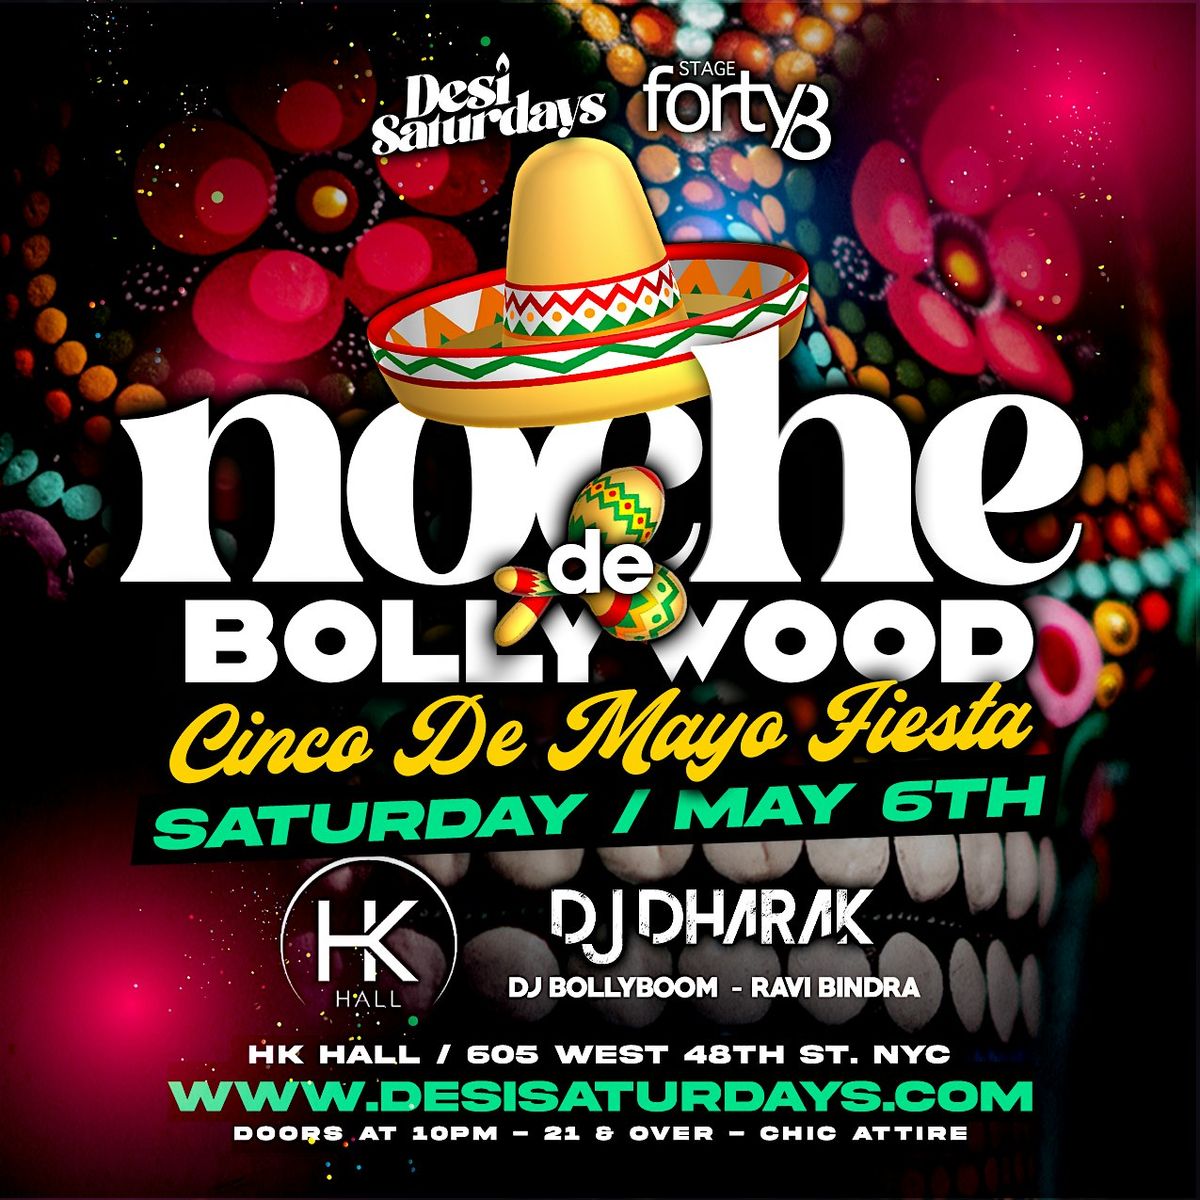 Cinco De Mayo : Bollywood Night @ HK HALL  (Complimentary Admission)